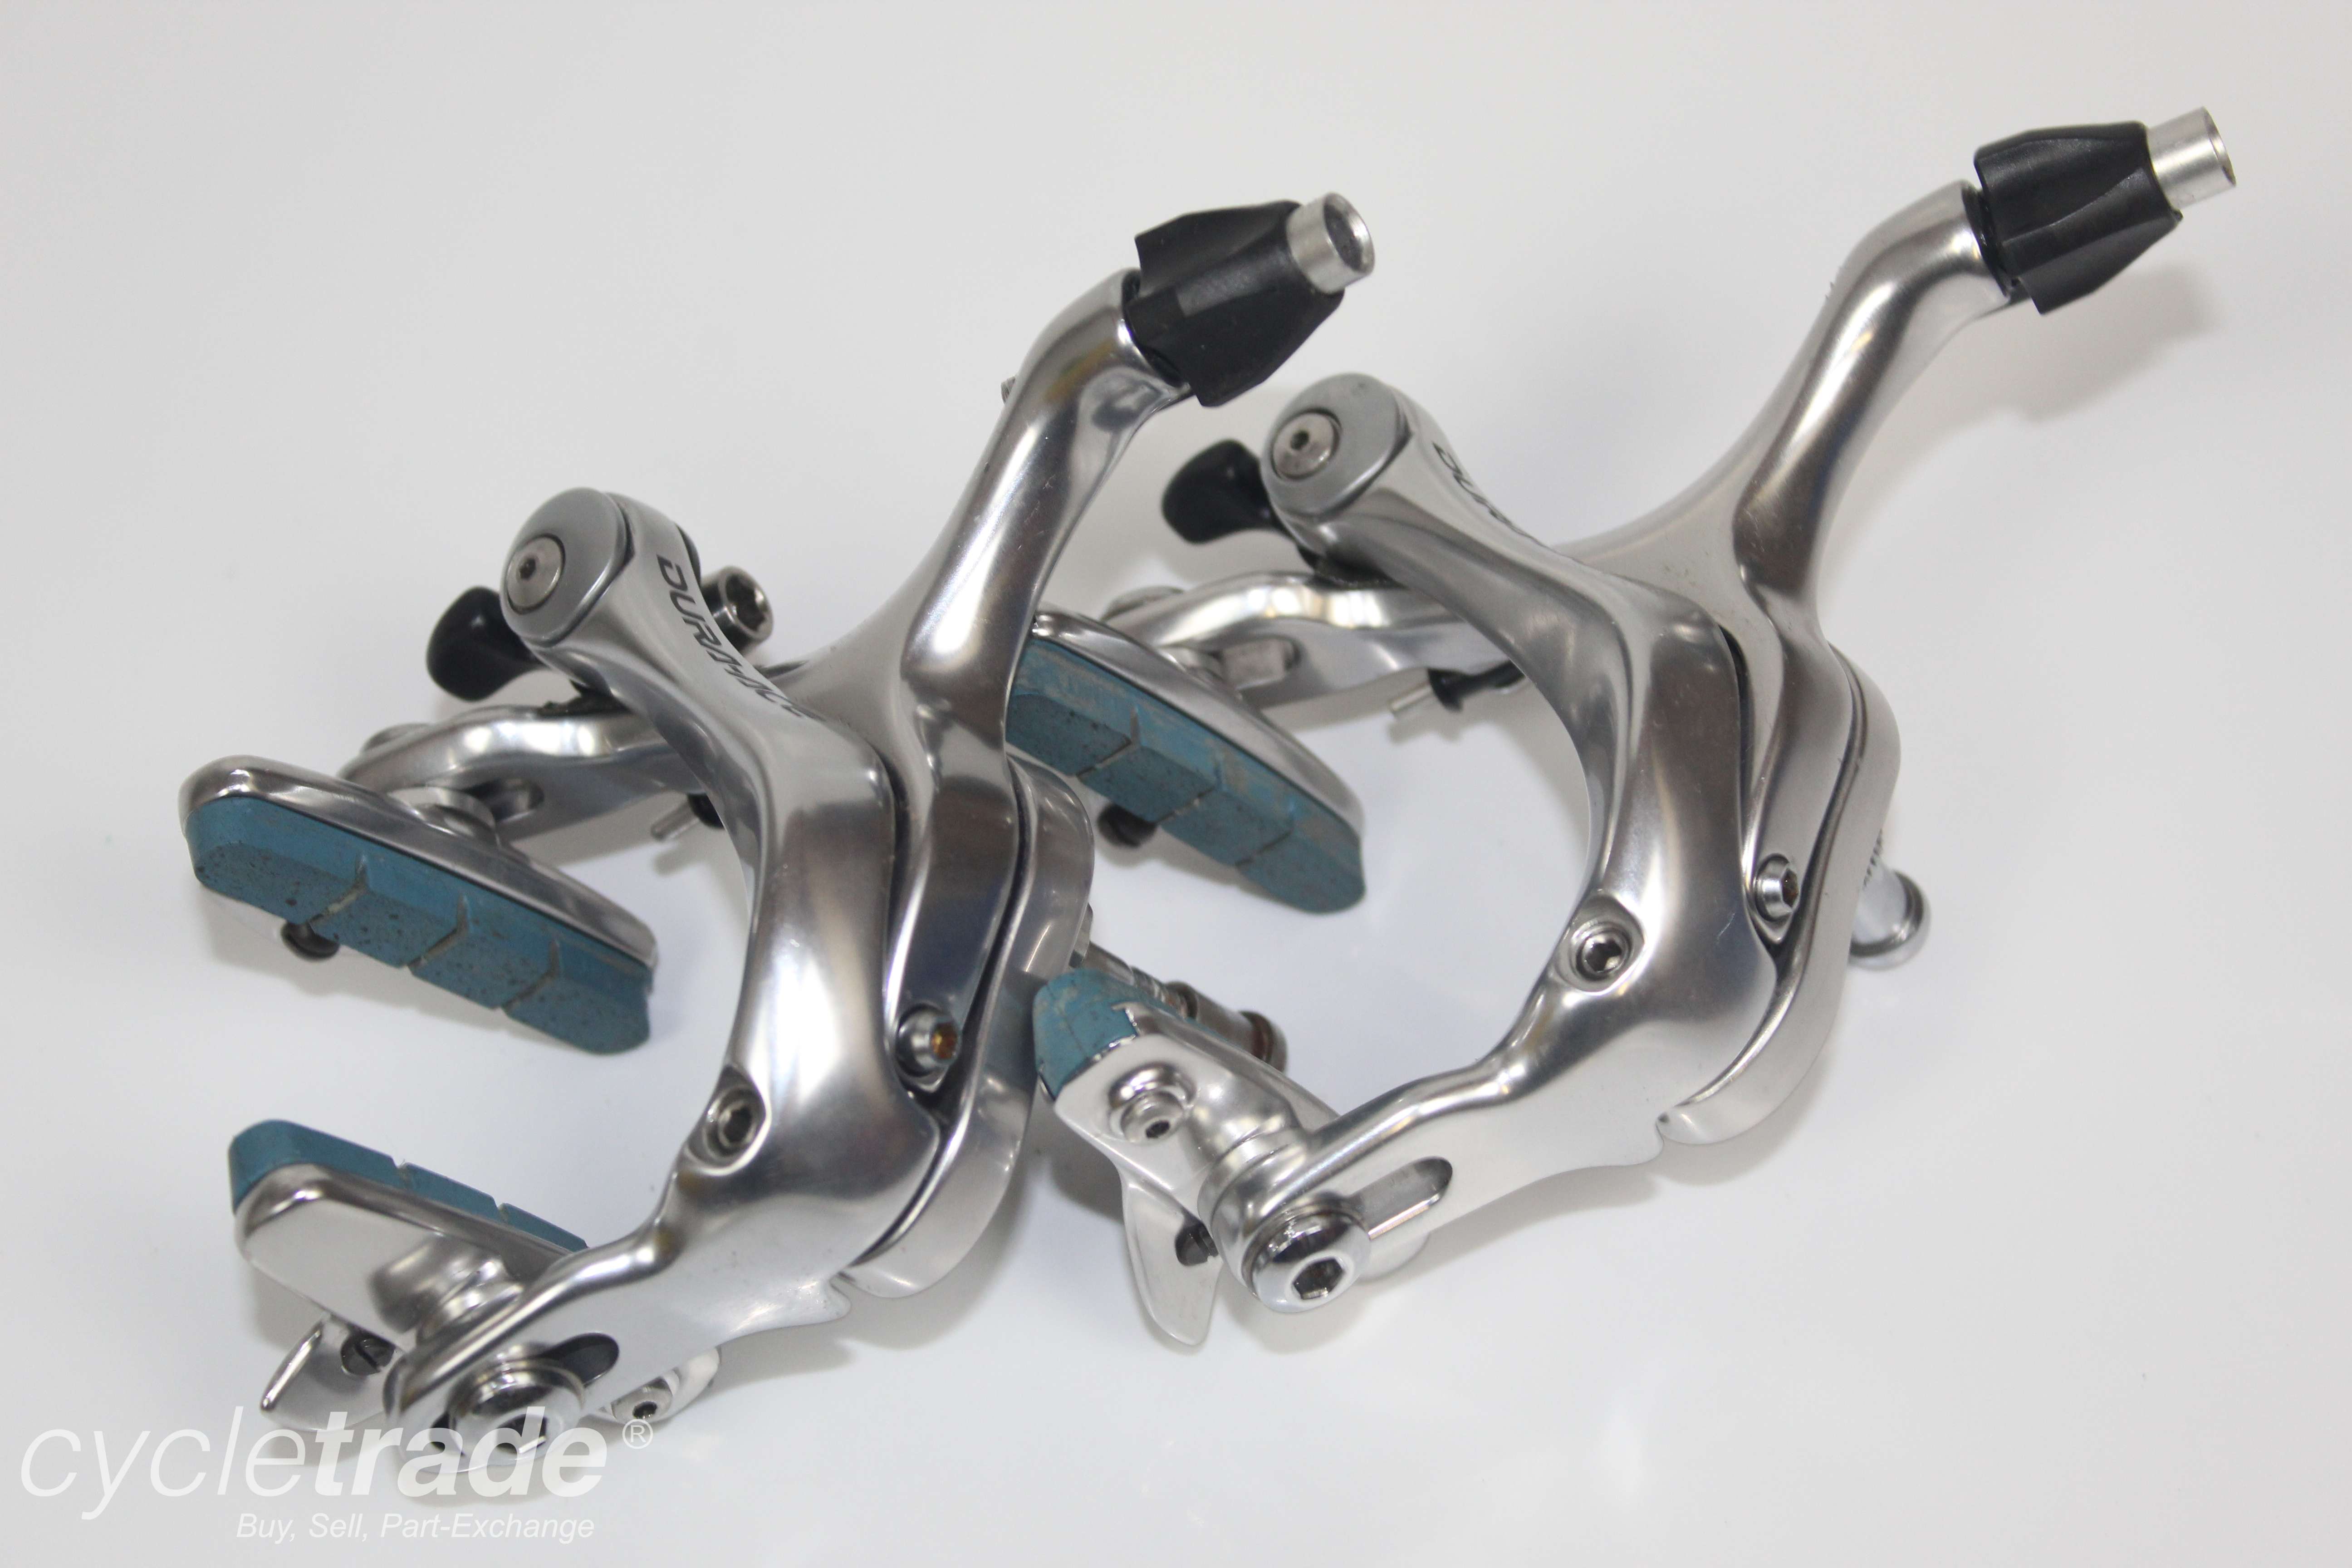 Brakeset- Shimano Dura Ace BR-7800 Silver - Grade B+